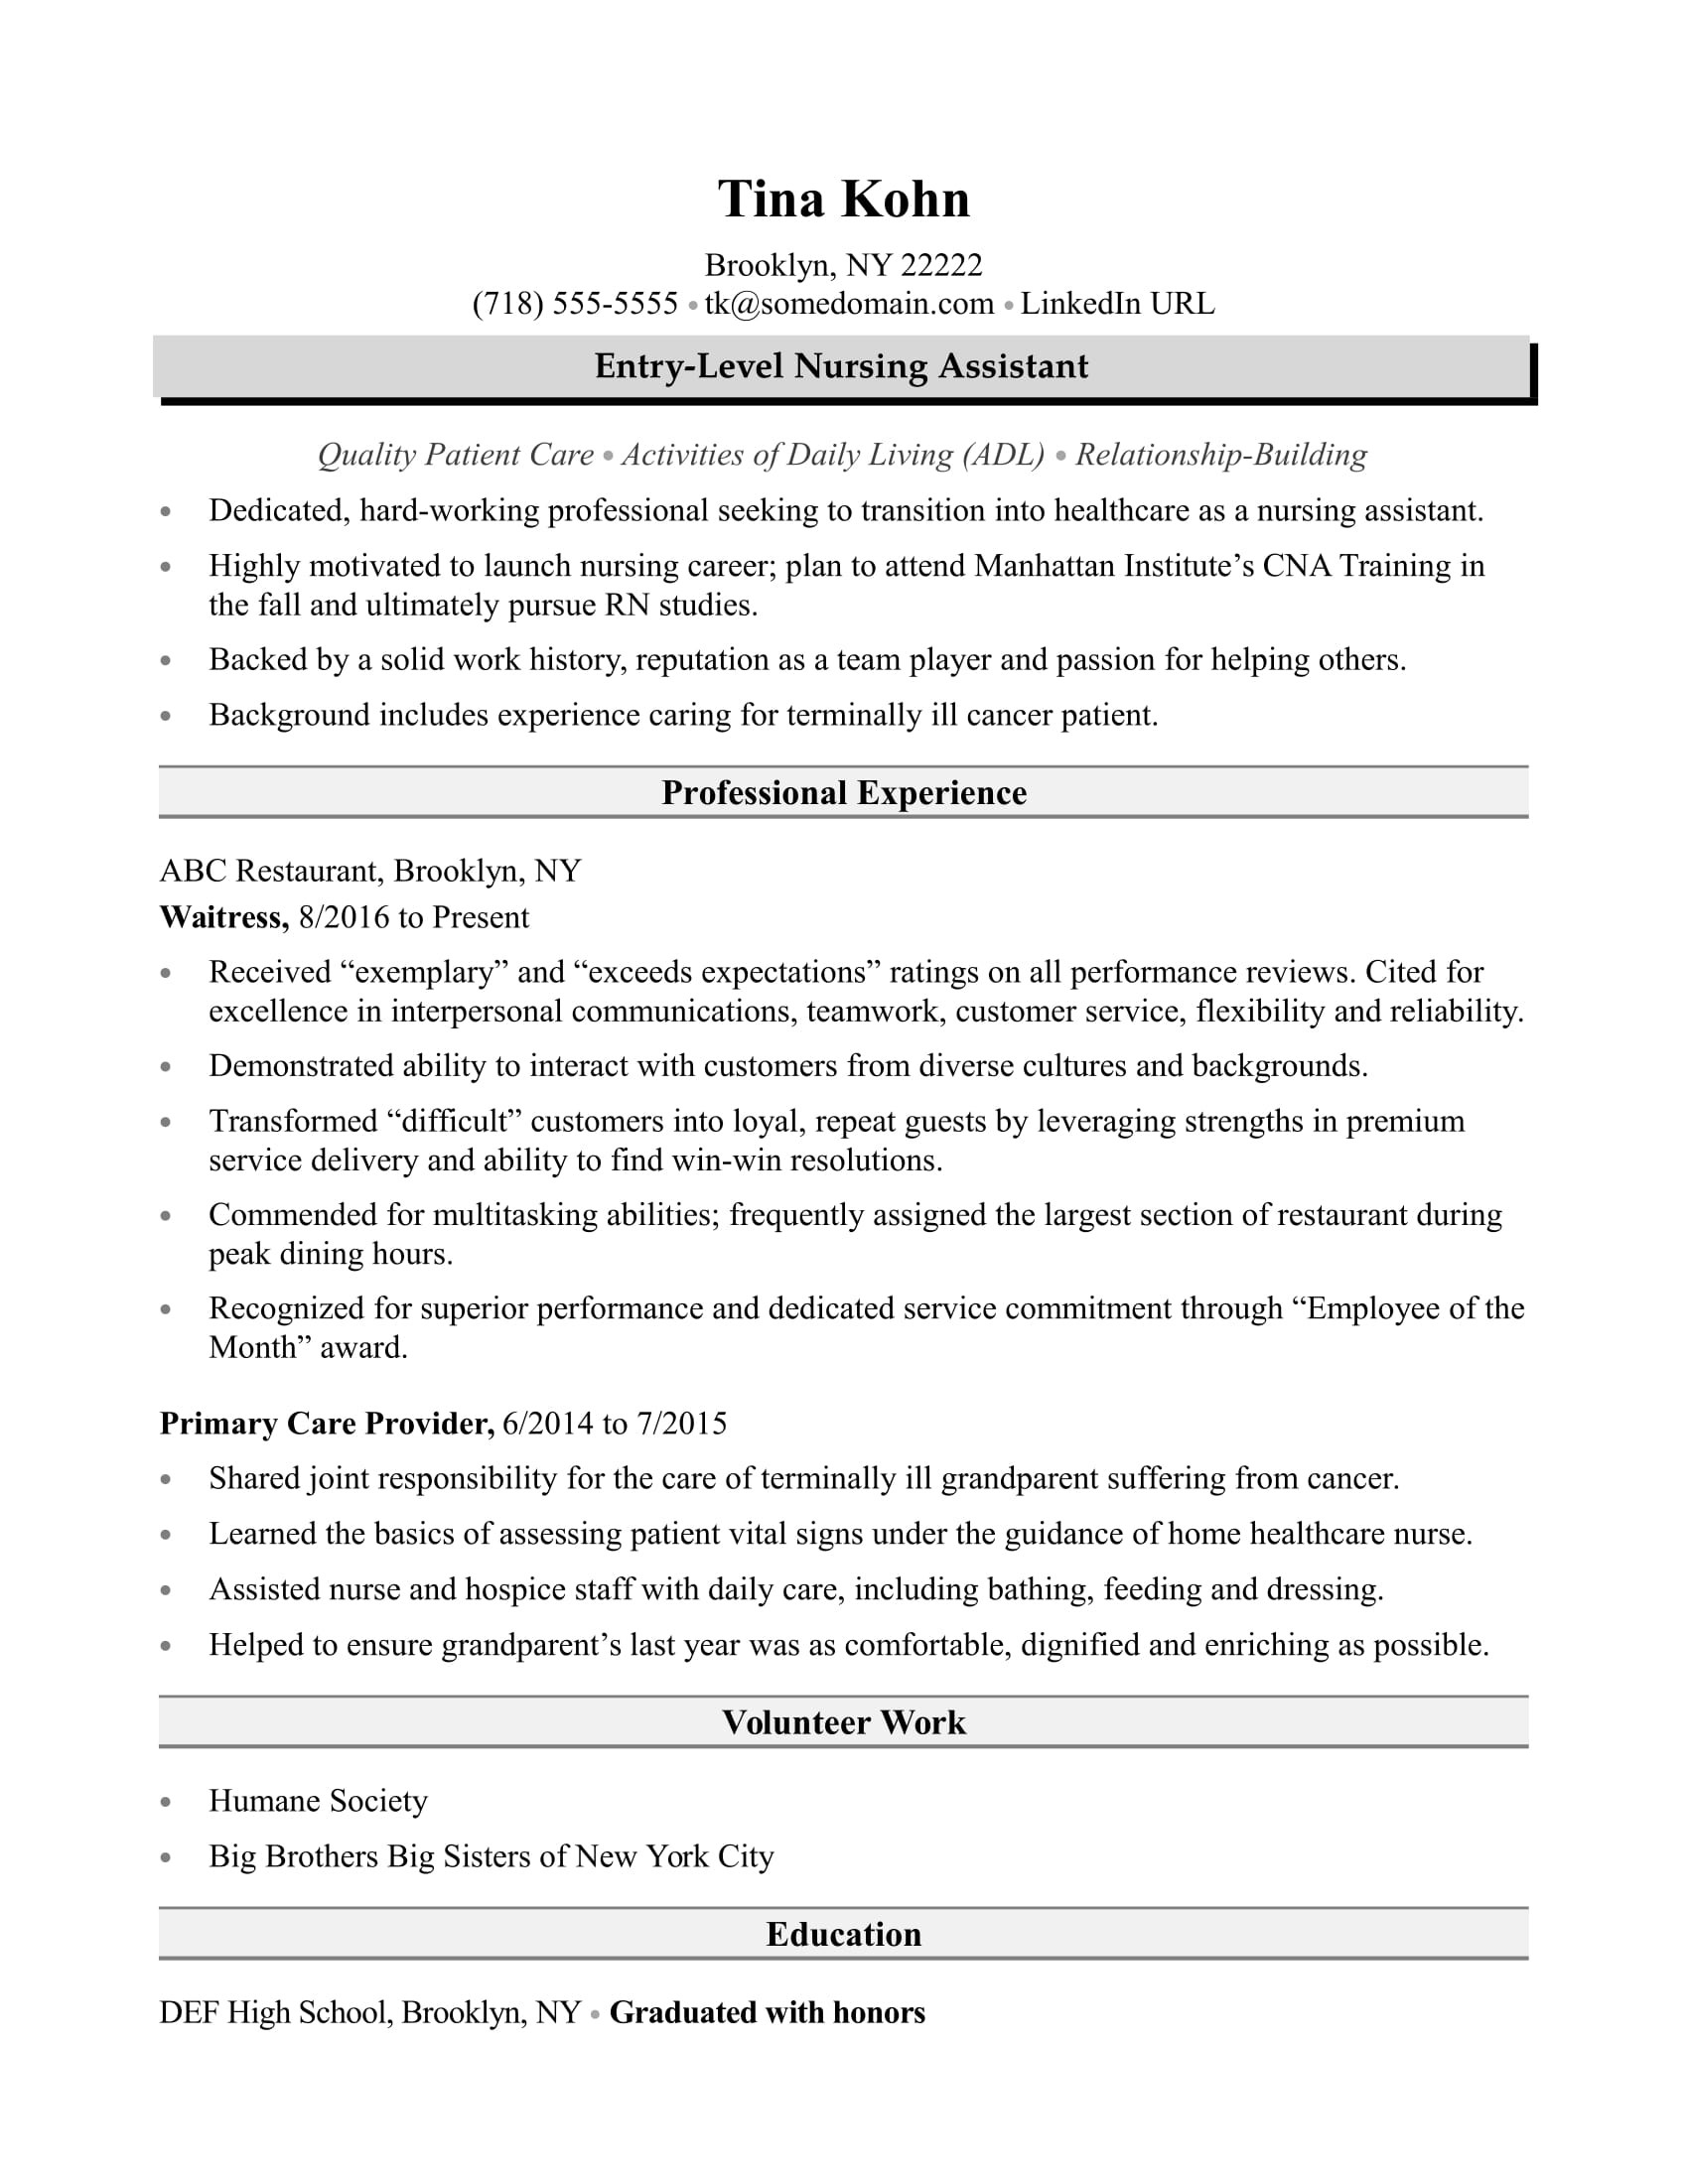 Sample Resume Entry Level Certified Nursing assistant Nursing assistant Resume Sample Monster.com